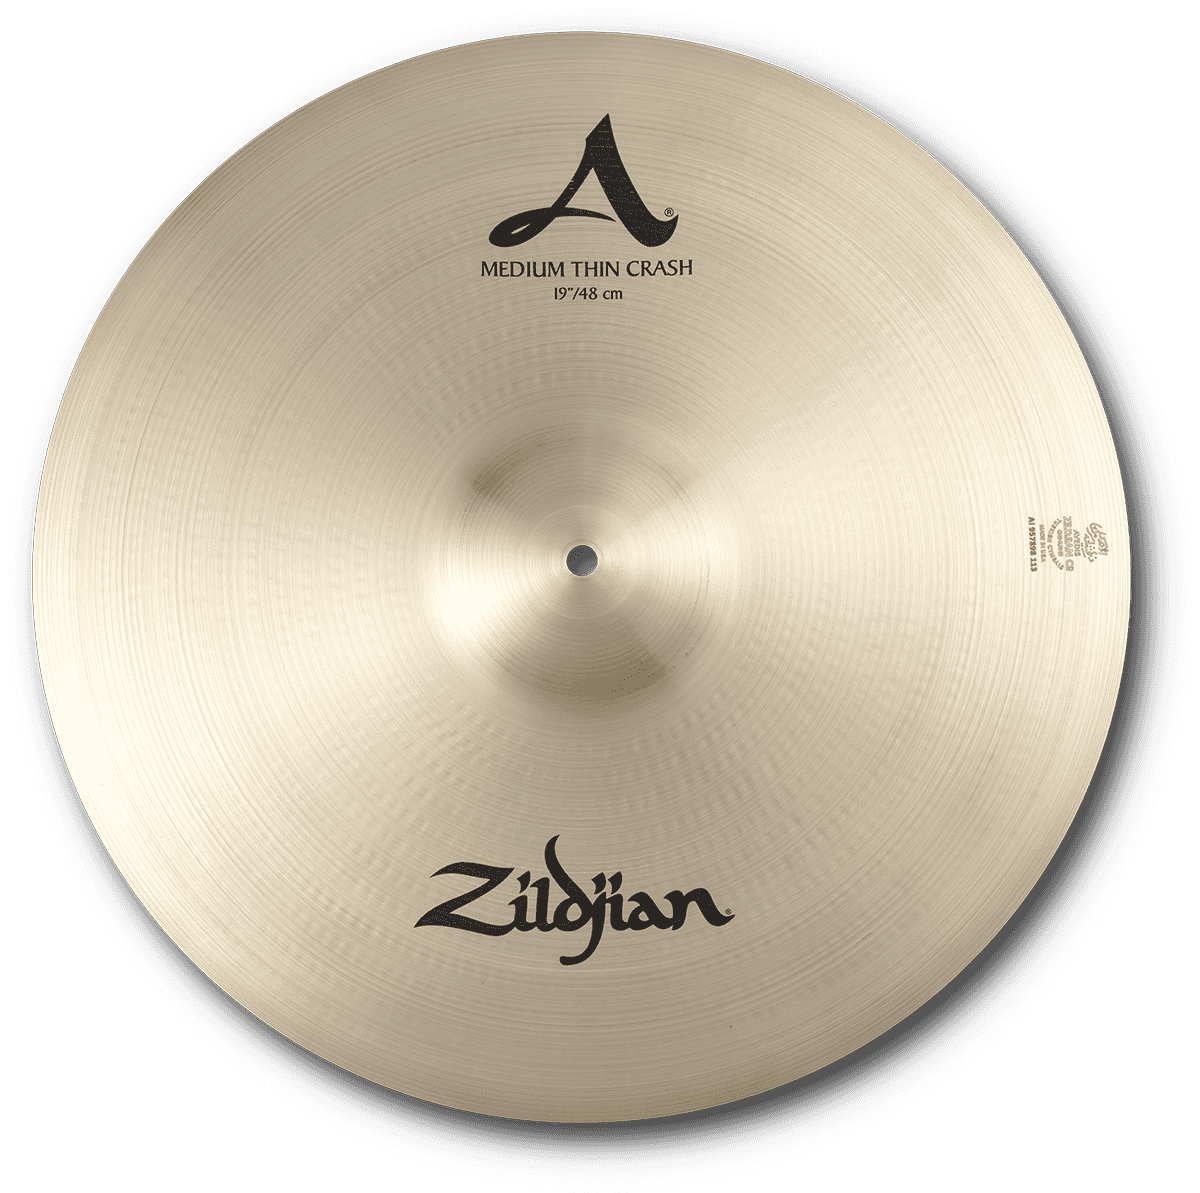 Zildjian Medium Thin Crash Avedis Serie 19 - 19 Pouces - Crash cymbal - Variation 2